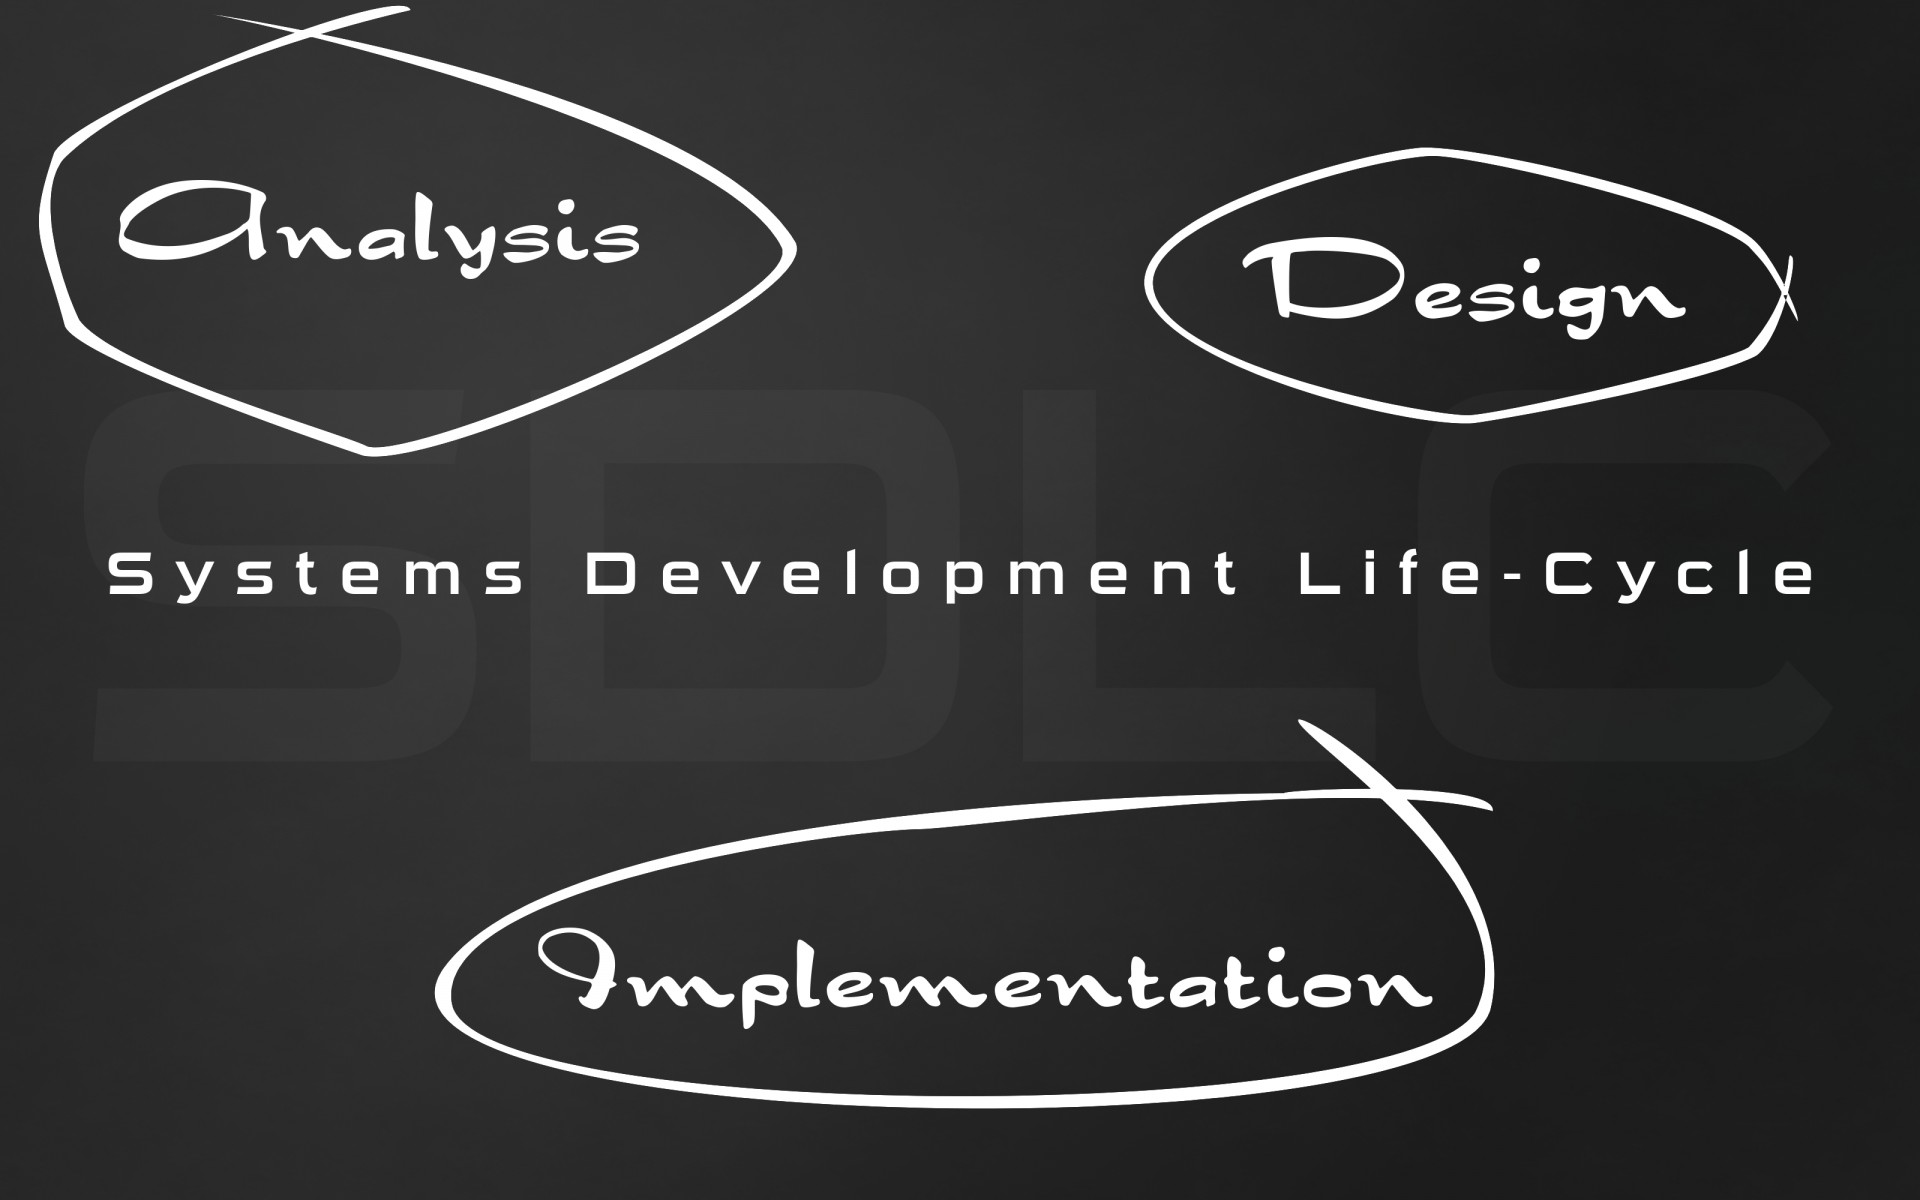 sdlc systems development free photo